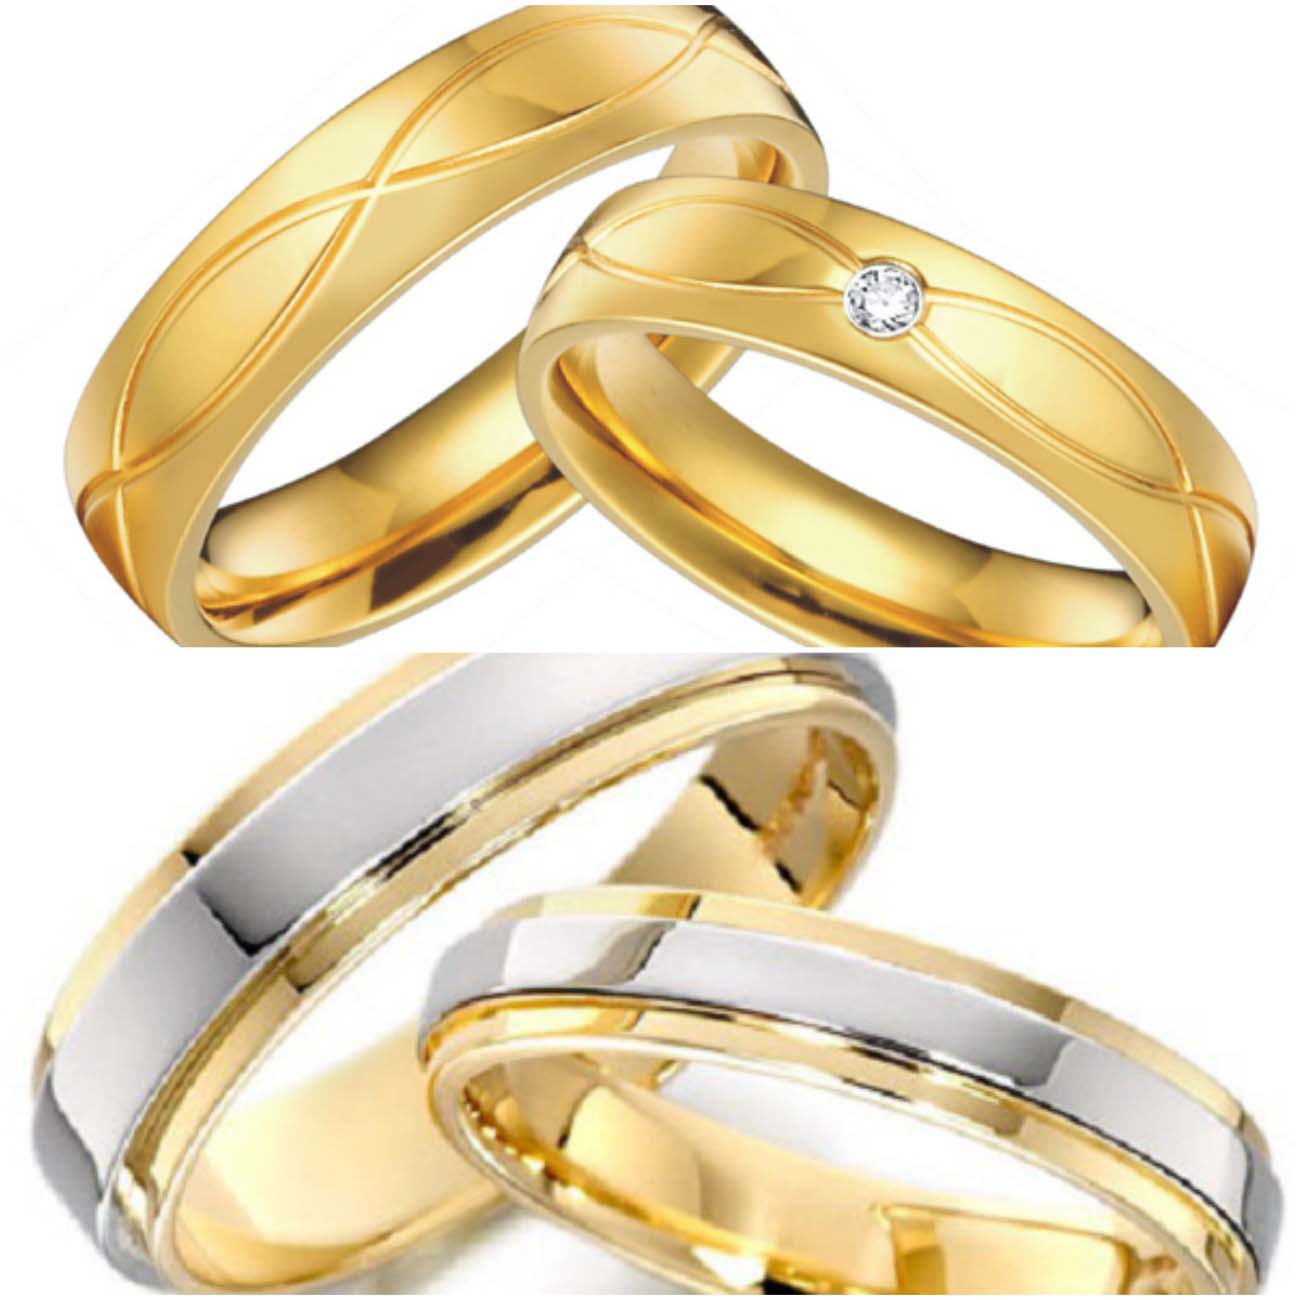 miodigitalphotoshop: 25 Inspirational Current Engagement Ring Designs